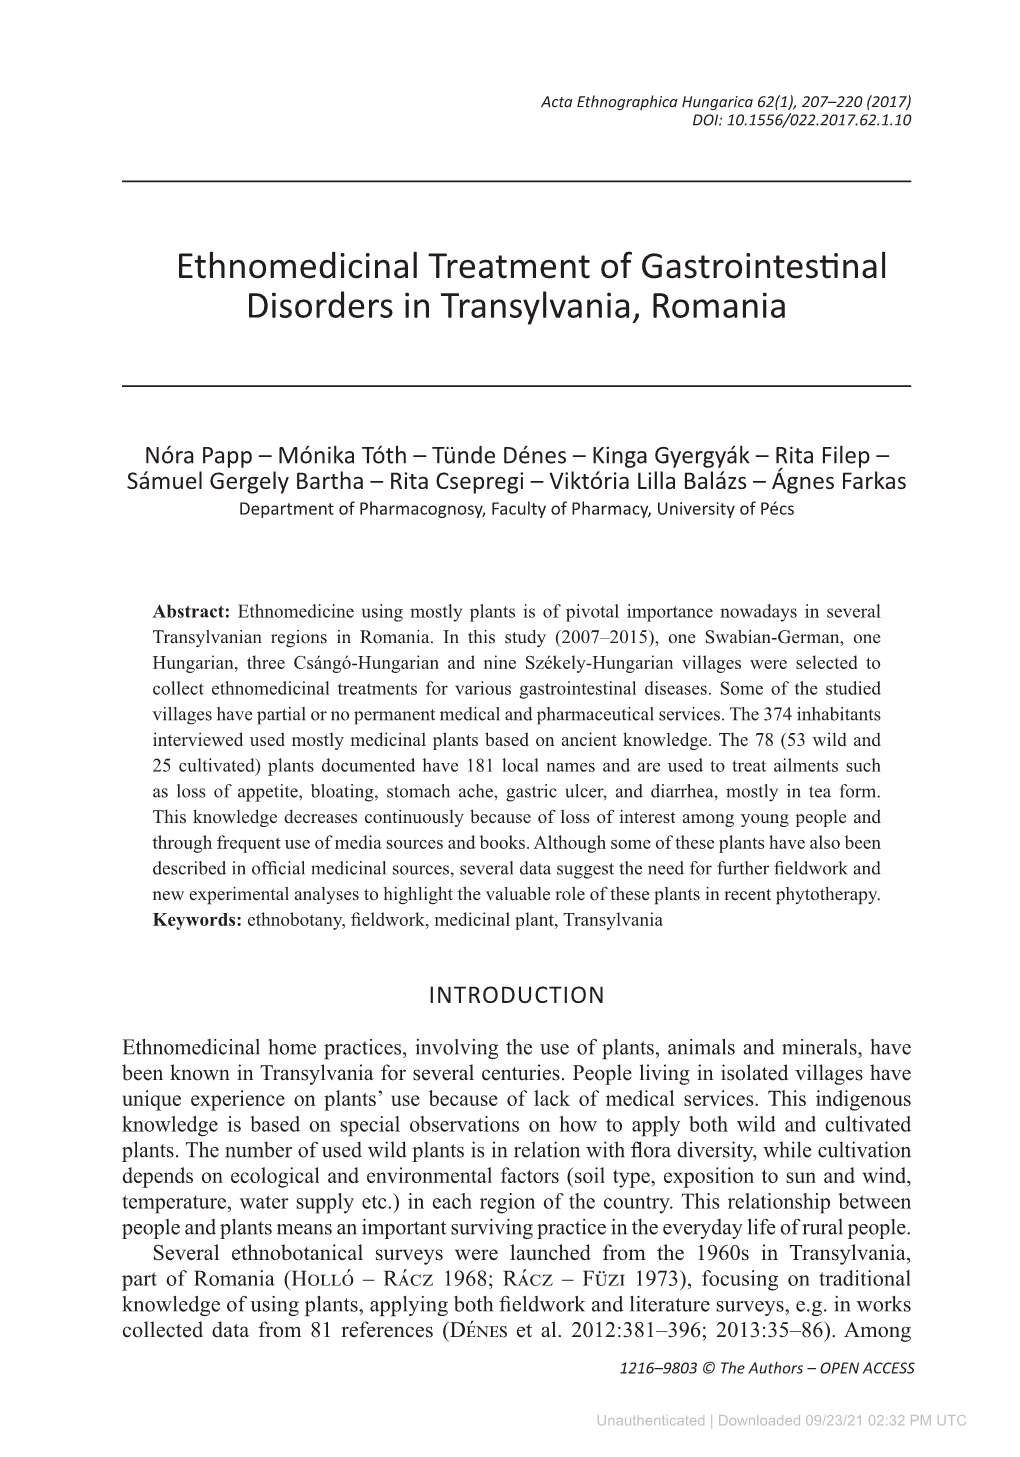 Ethnomedicinal Treatment of Gastrointestinal Disorders in Transylvania, Romania